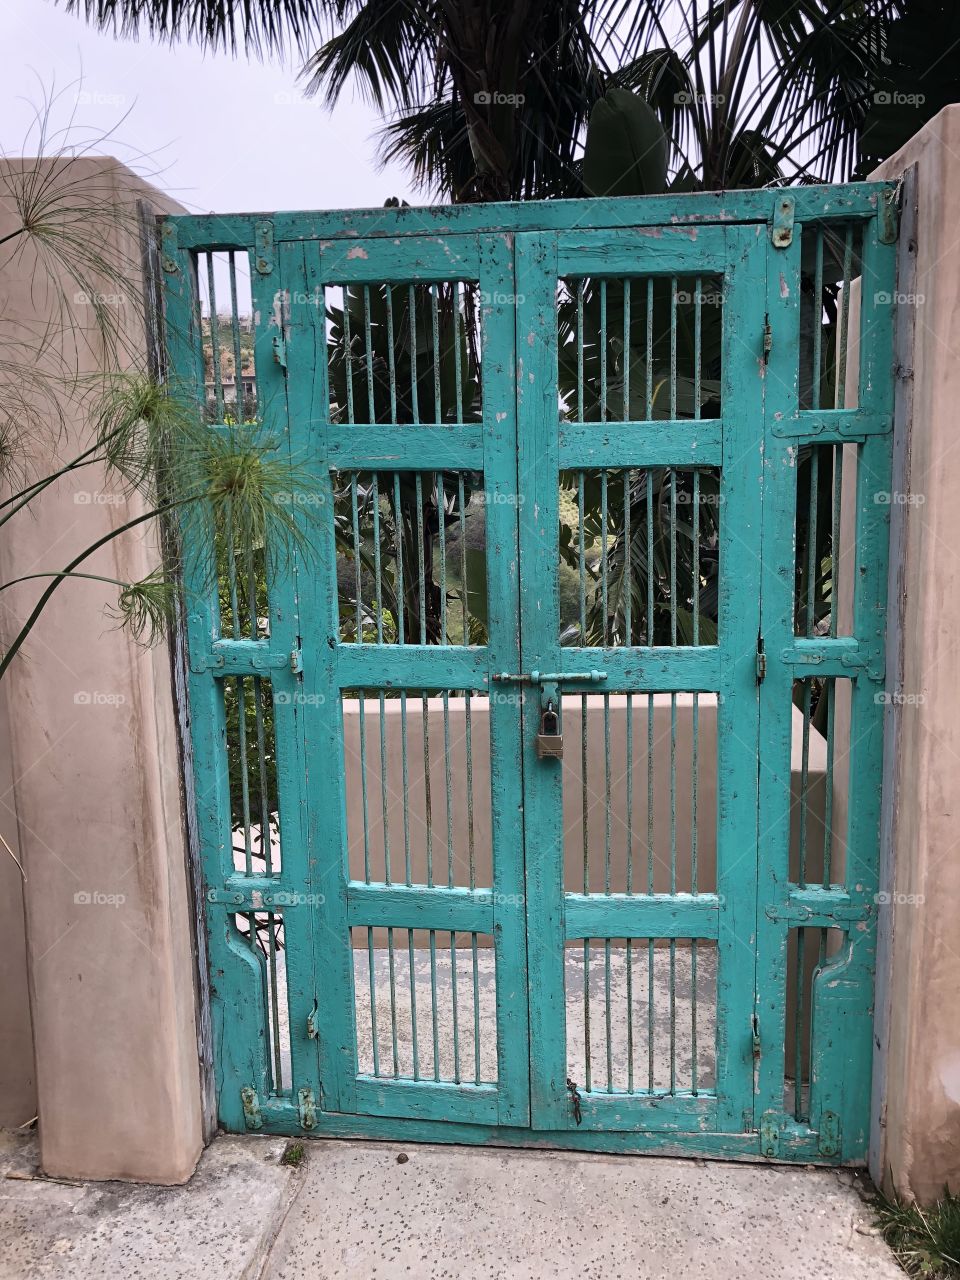 Teal gate